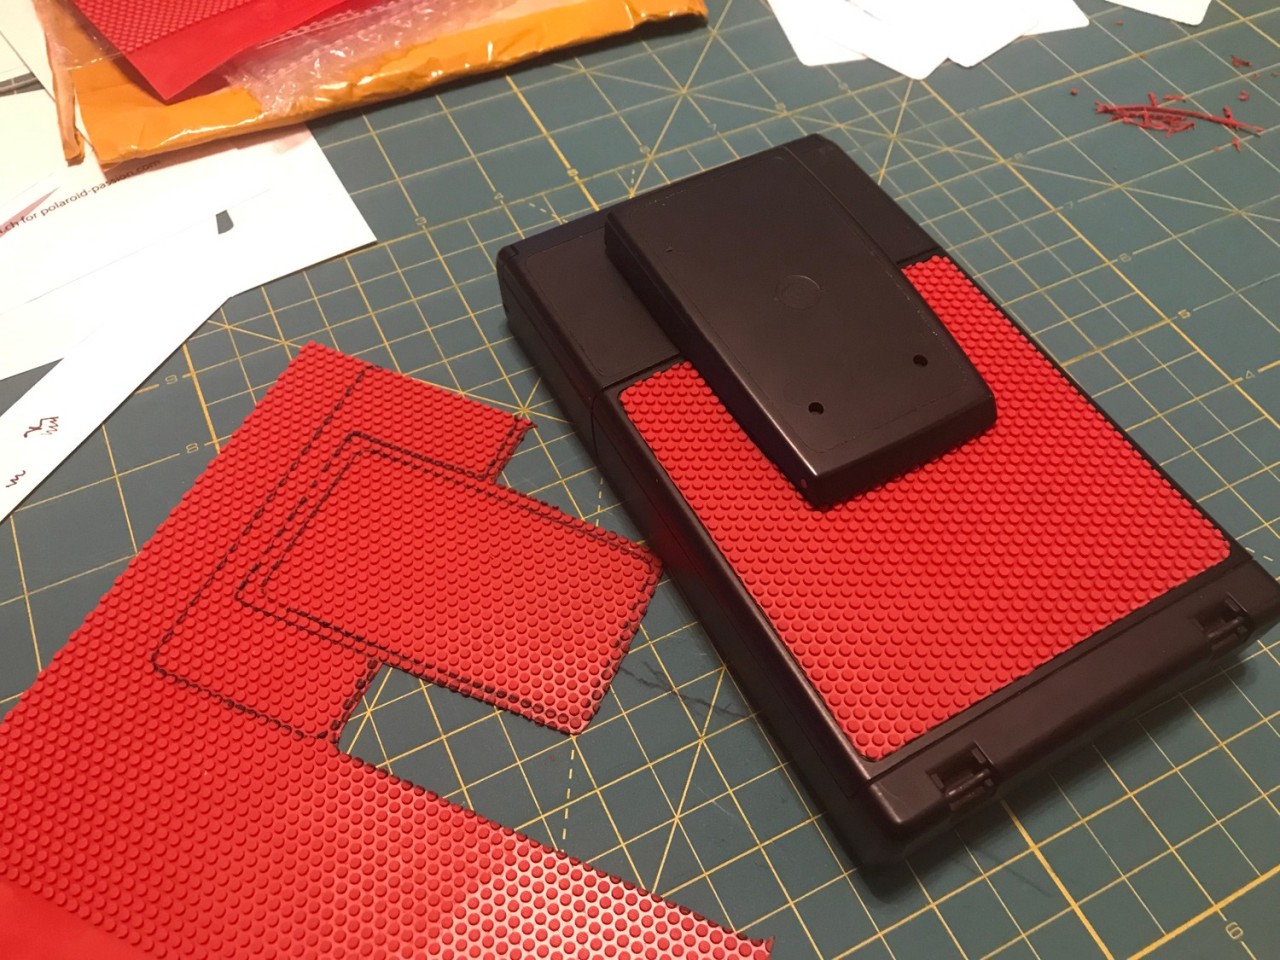 Custom Re-skin of the Polaroid SX-70